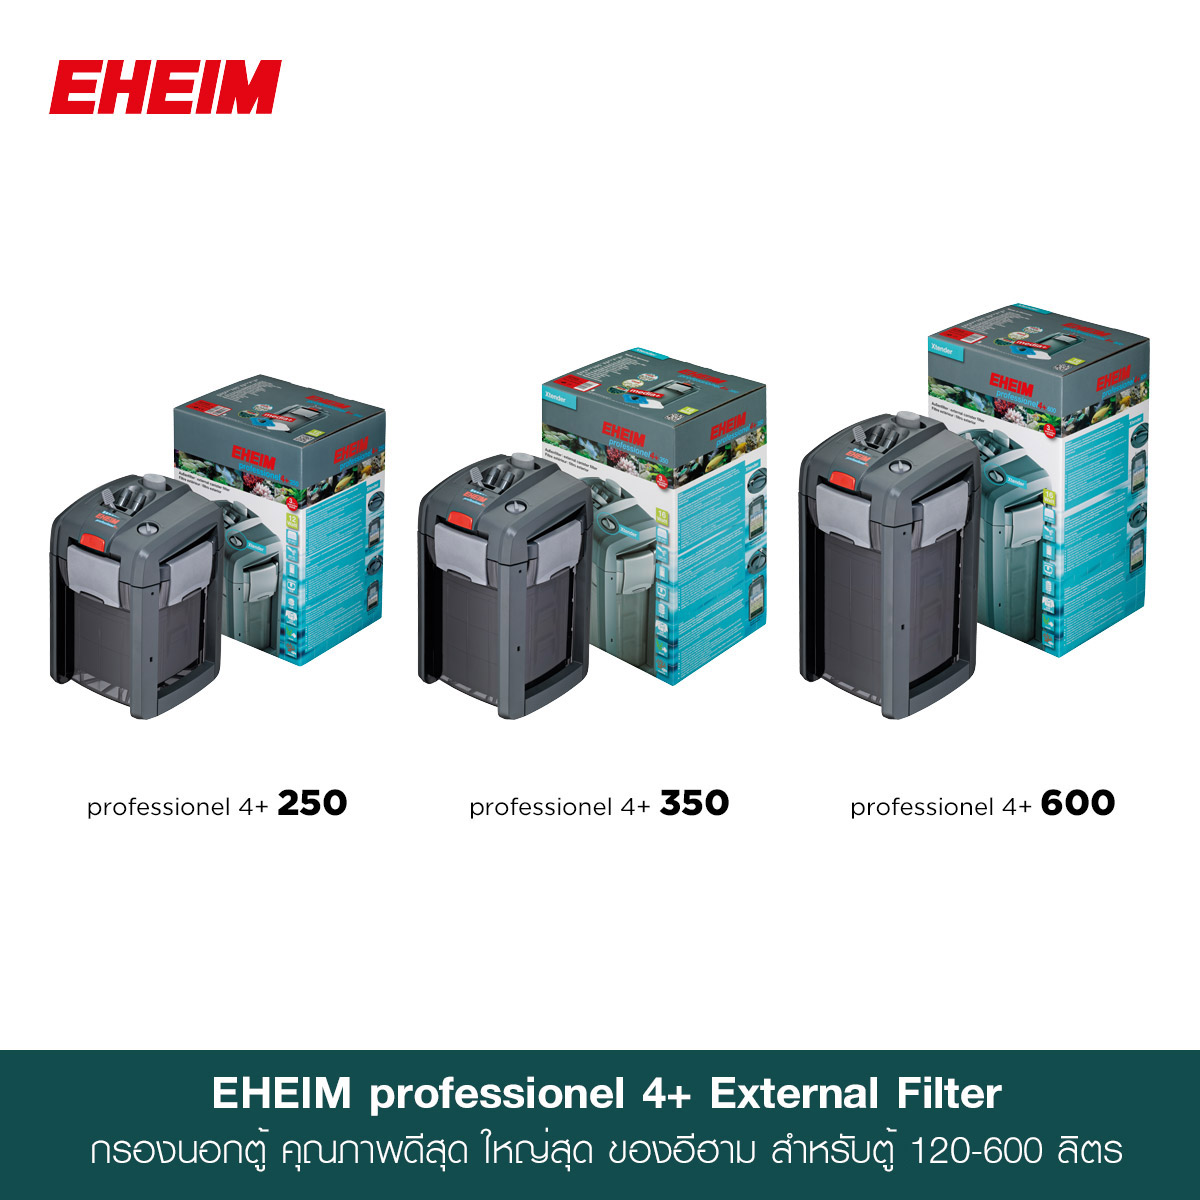 Extender professionel 4+ - Authorized EHEIM Service